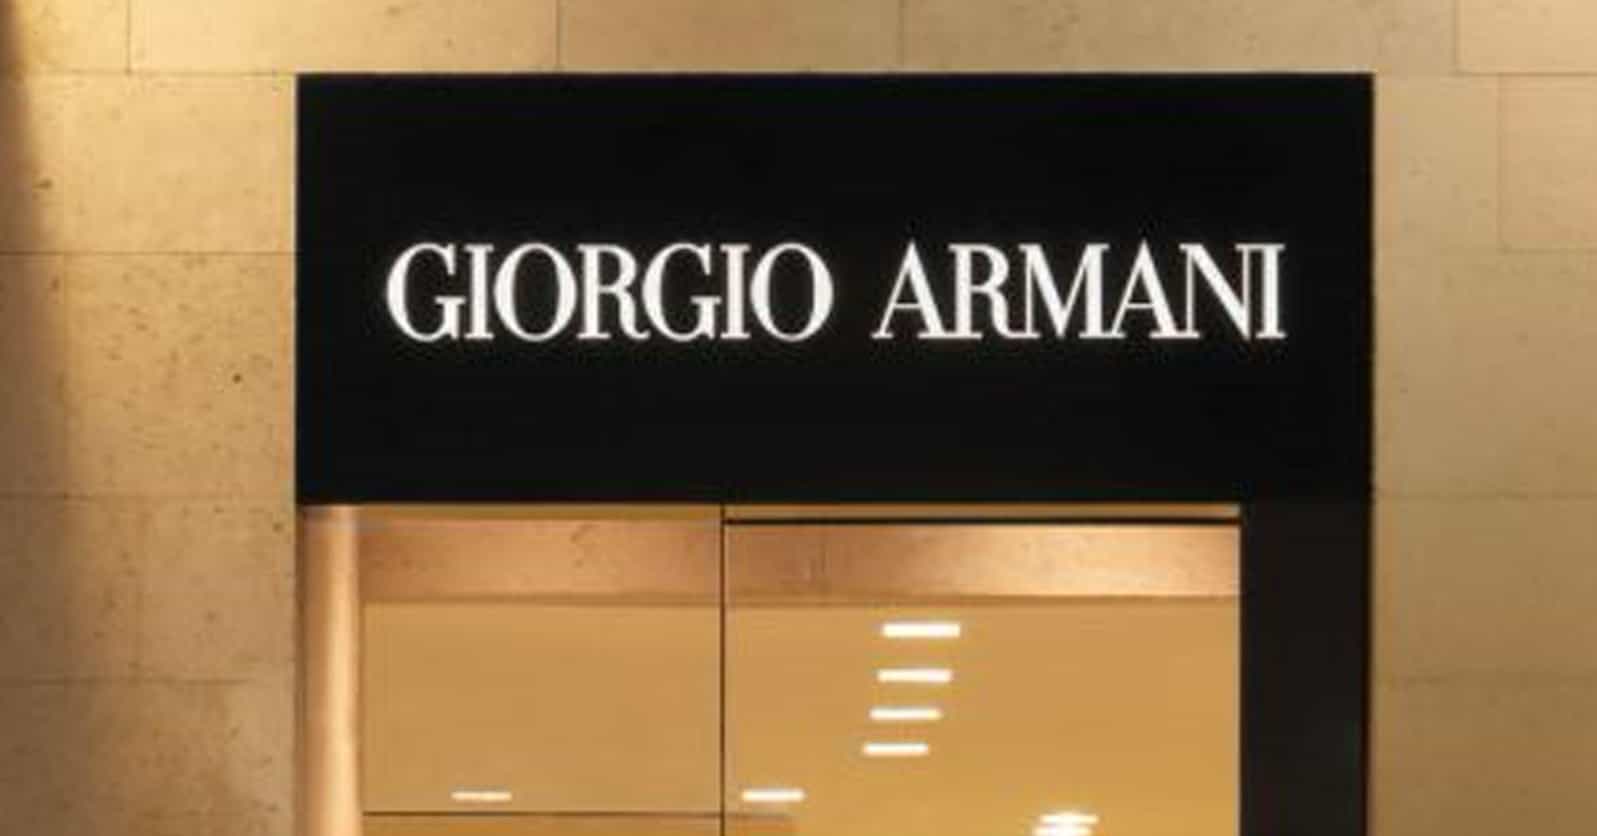 Giorgio Armani S.p.A. Celebrities | List of Famous People Who Wear ...